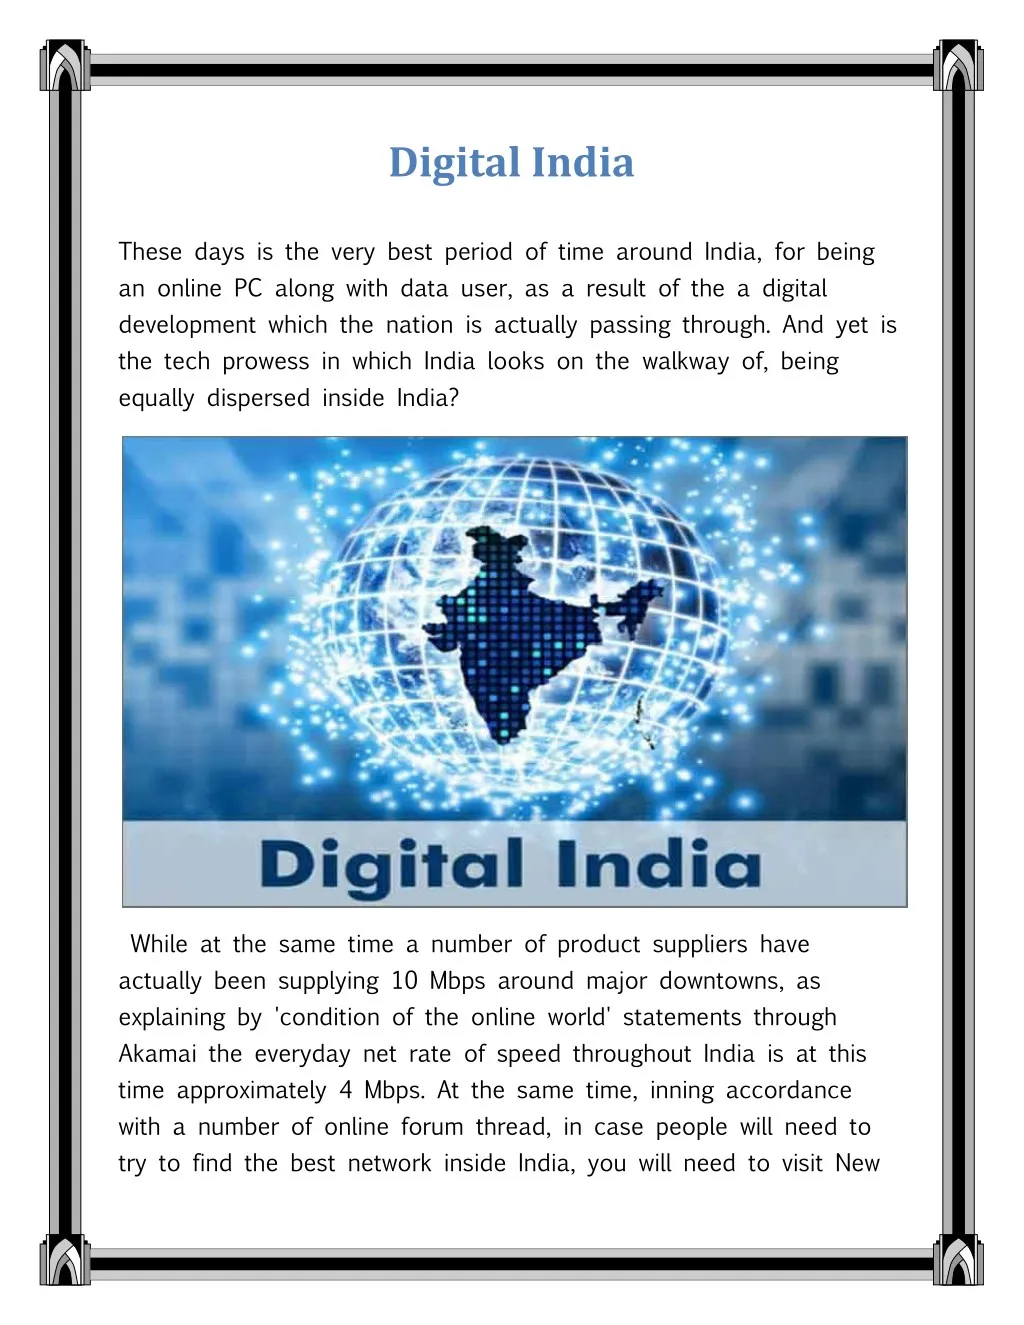 essay on digital india for new india in marathi